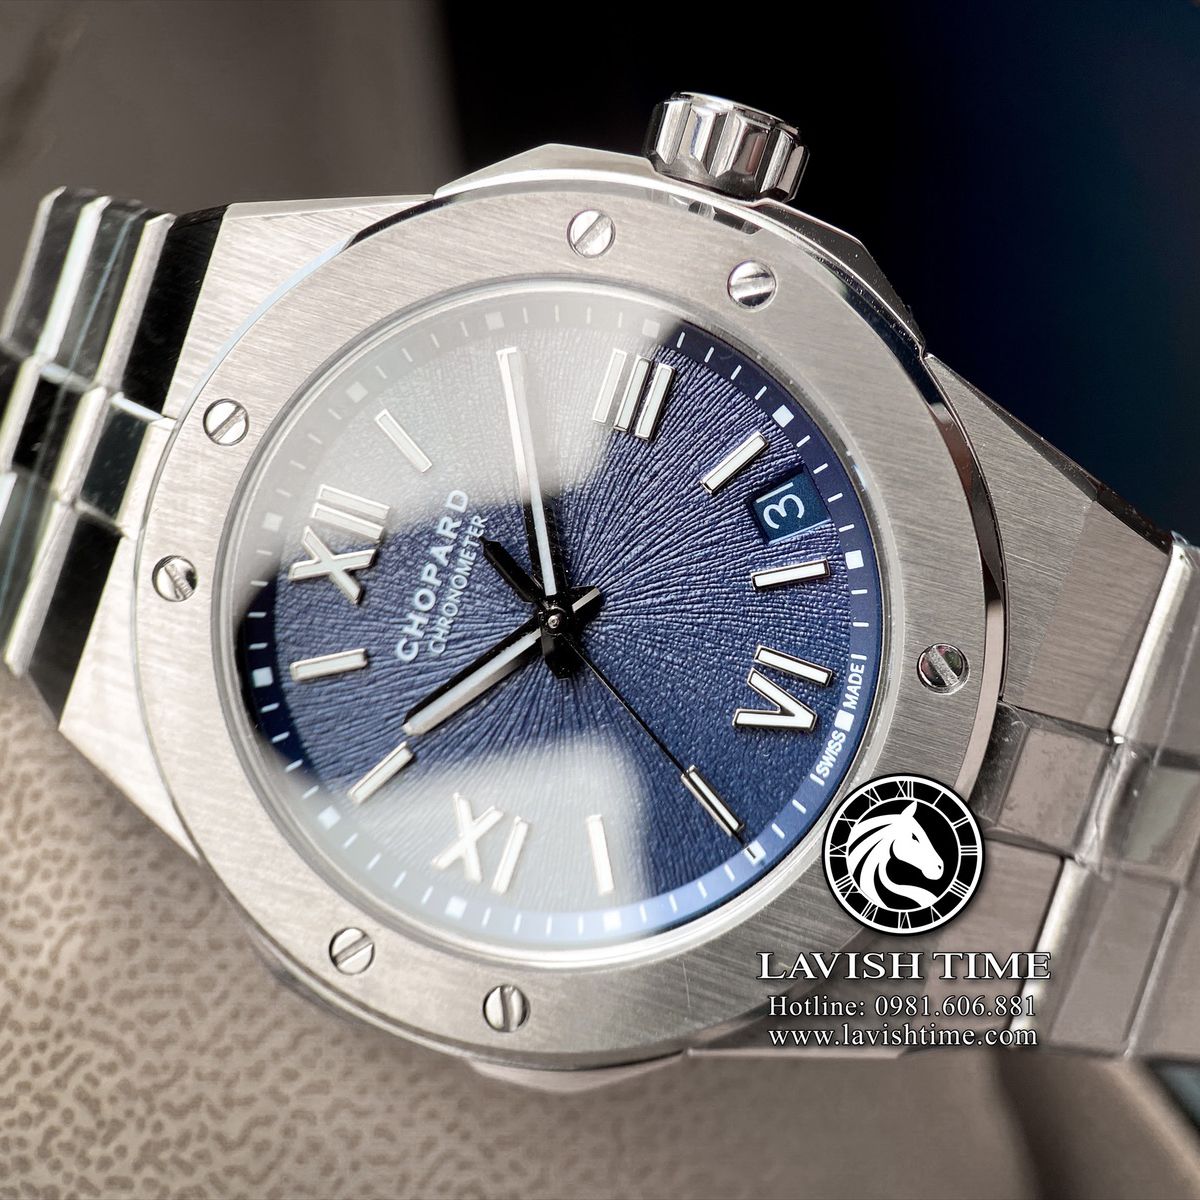 Chopard Alpine Eagle Blue Dial 36mm Automatic Watch 2998601-3001